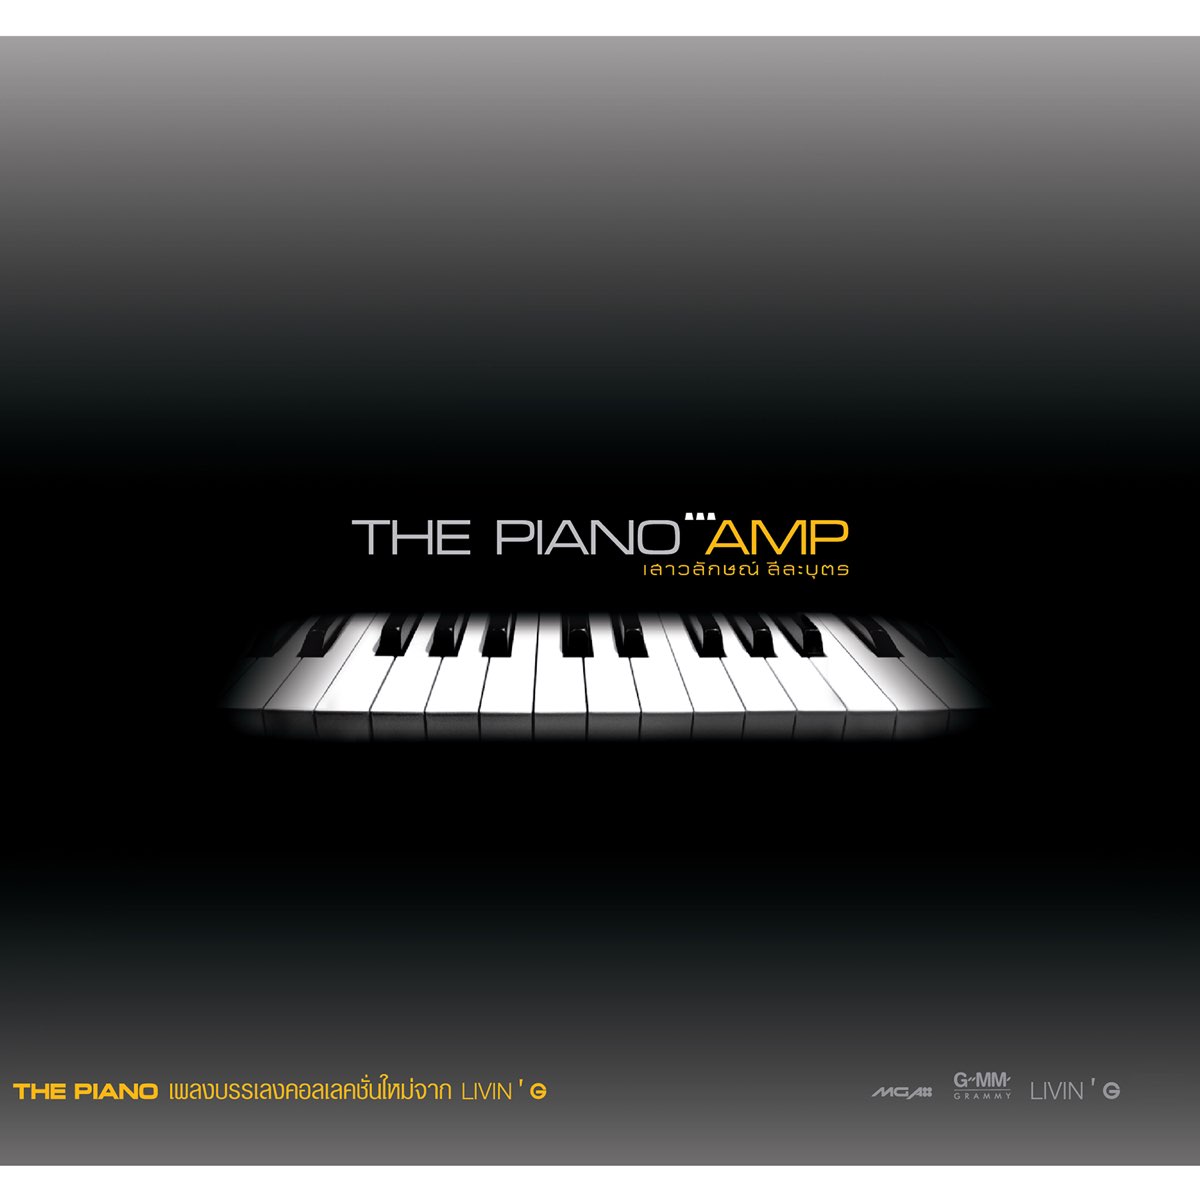 The Piano Amp – Album par แอม เสาวลักษณ์ – Apple Music